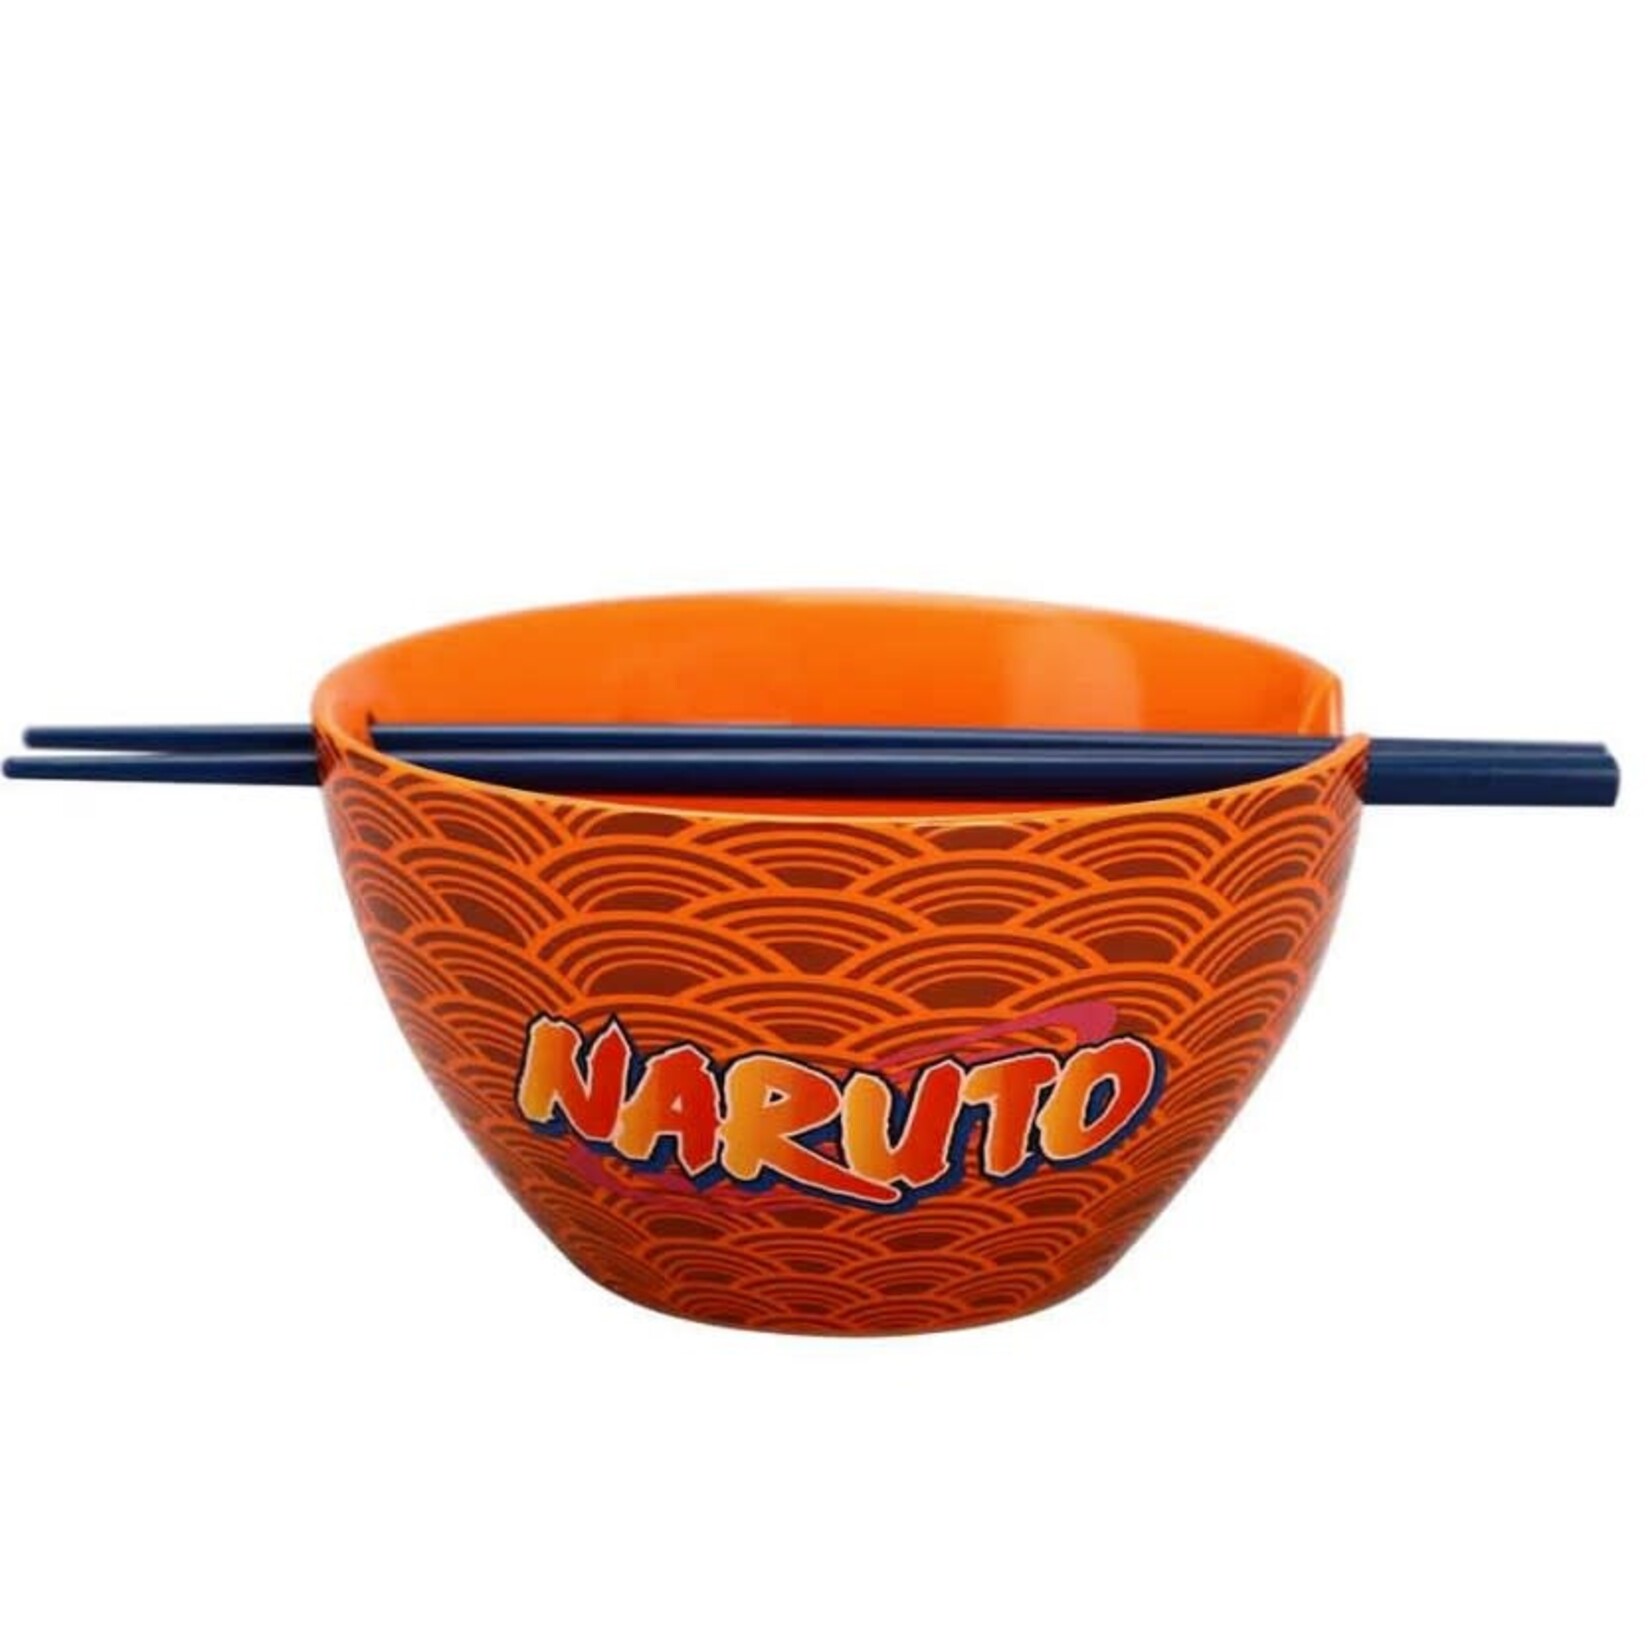 Naruto Characters Ceramic Ramen Bowl with Chopsticks